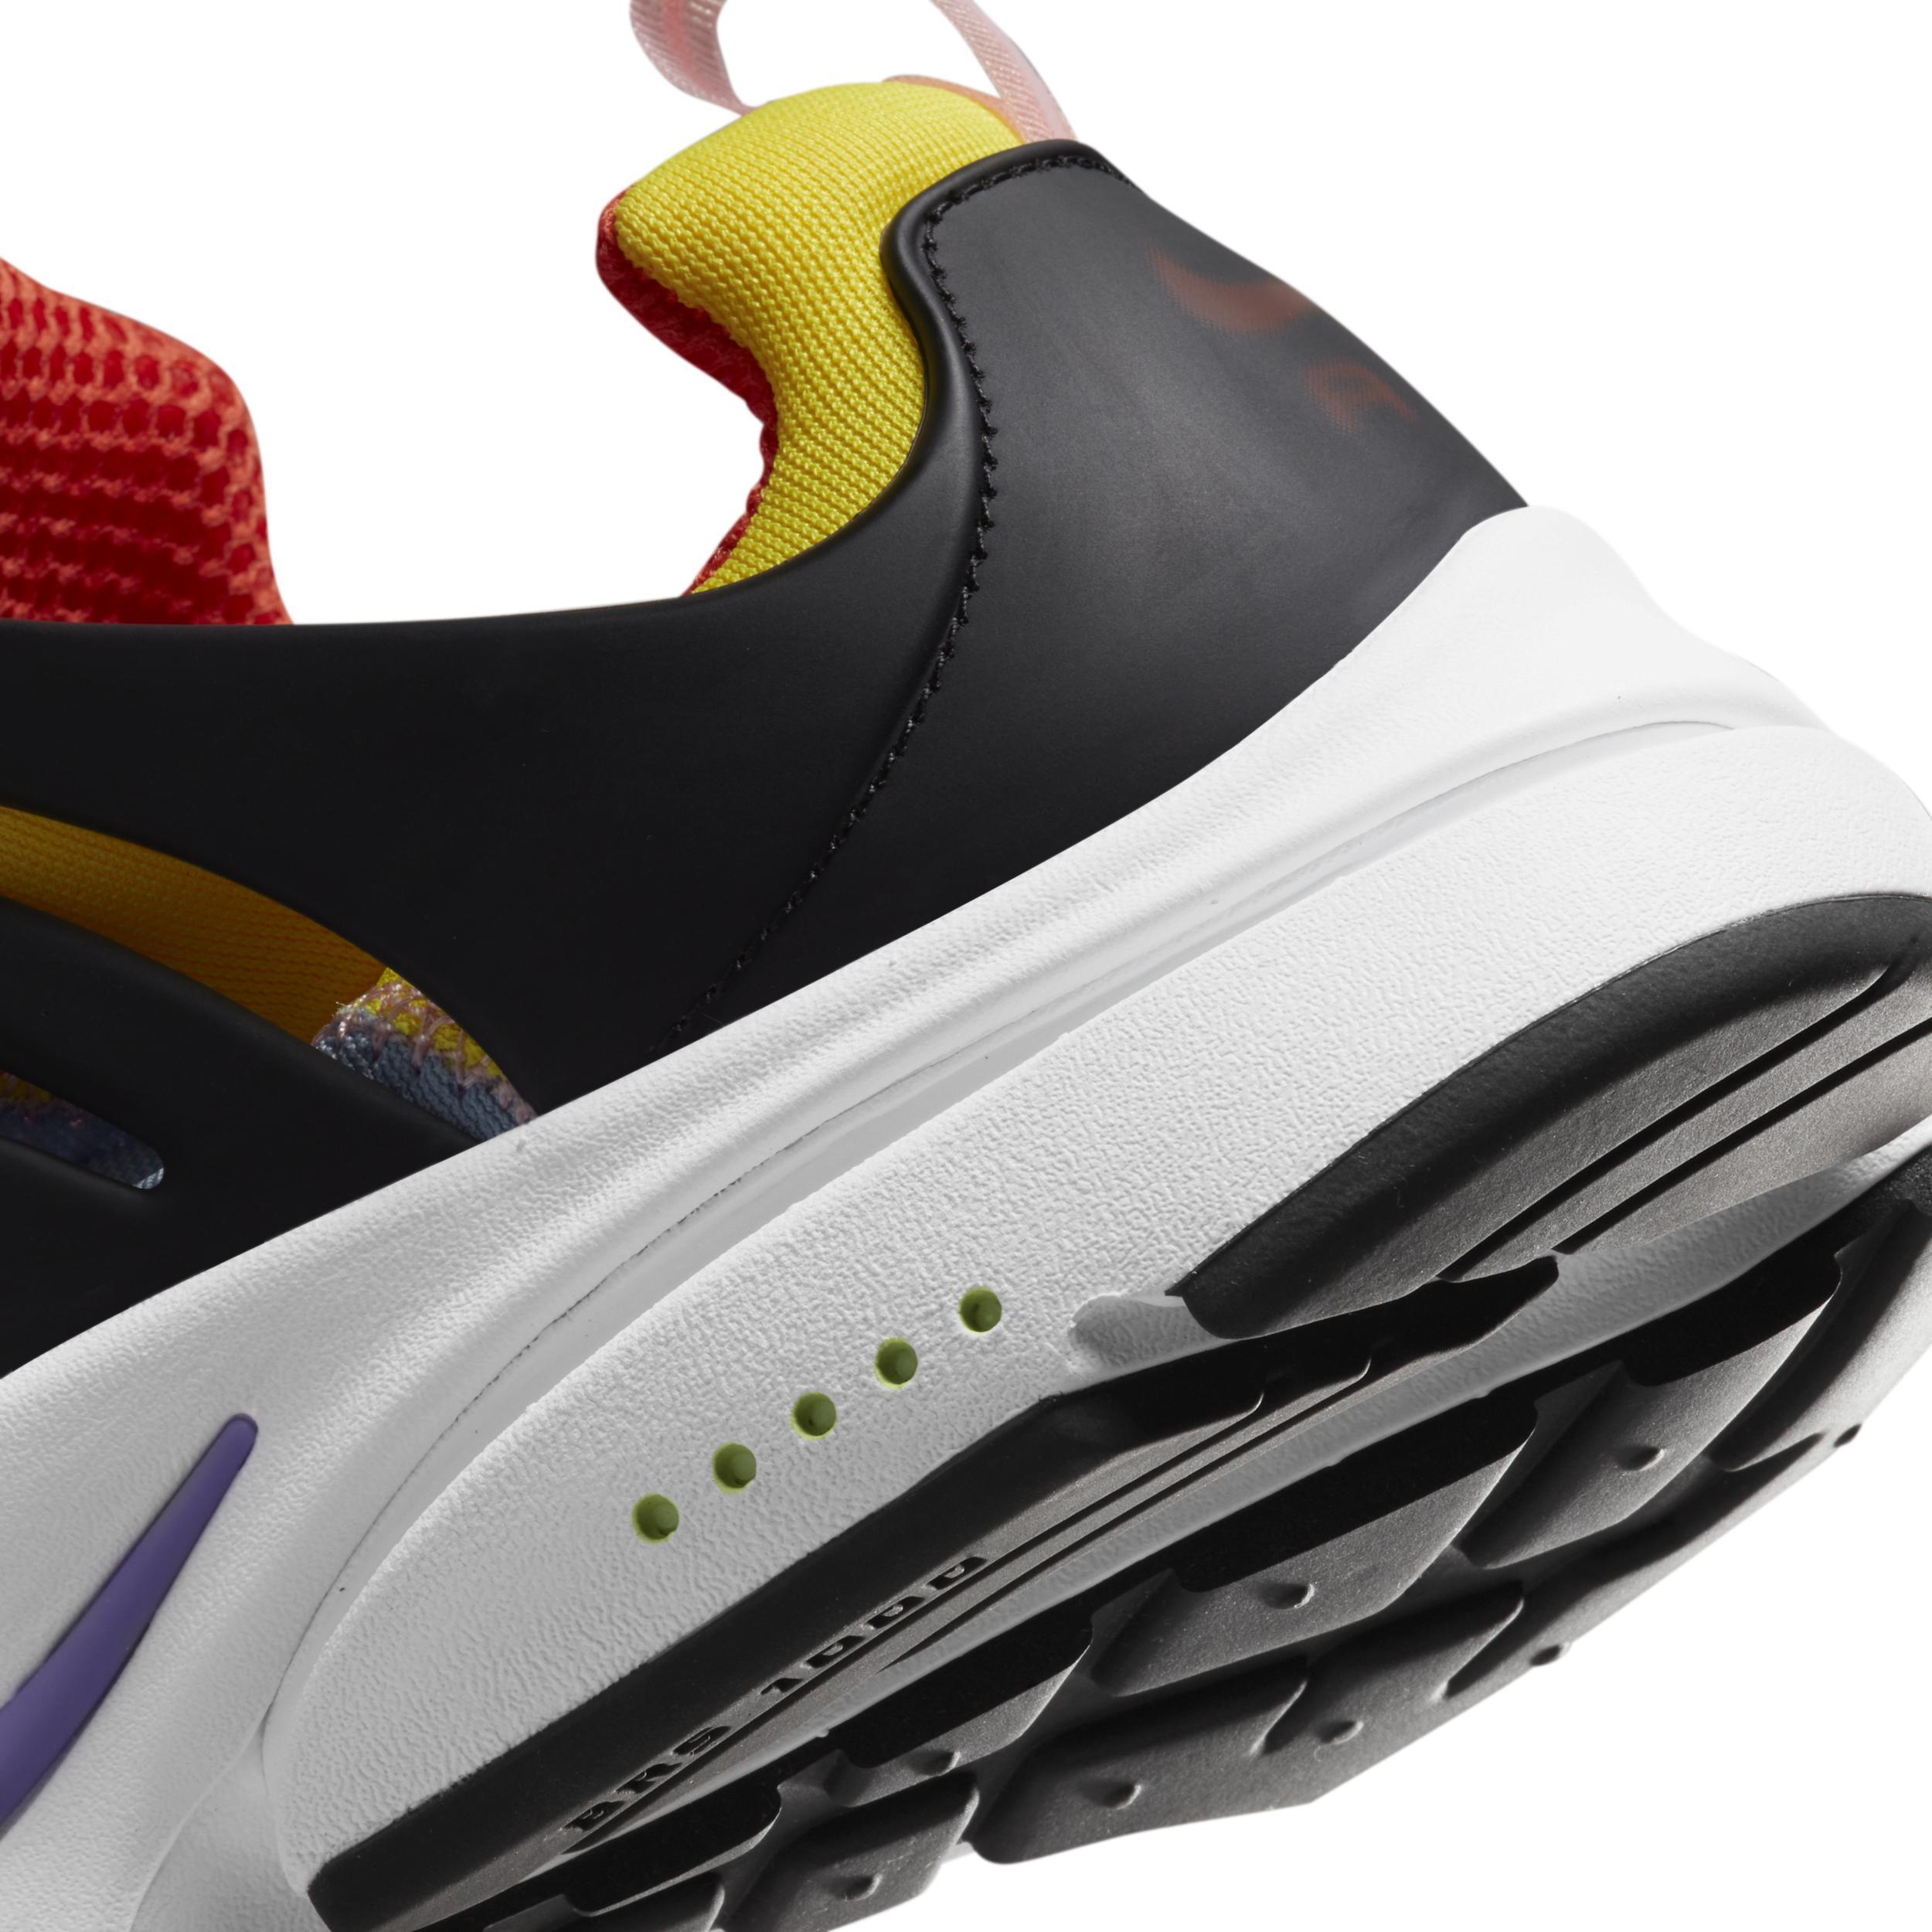 Nike Mens Nike Air Presto AP - Mens Running Shoes Product Image